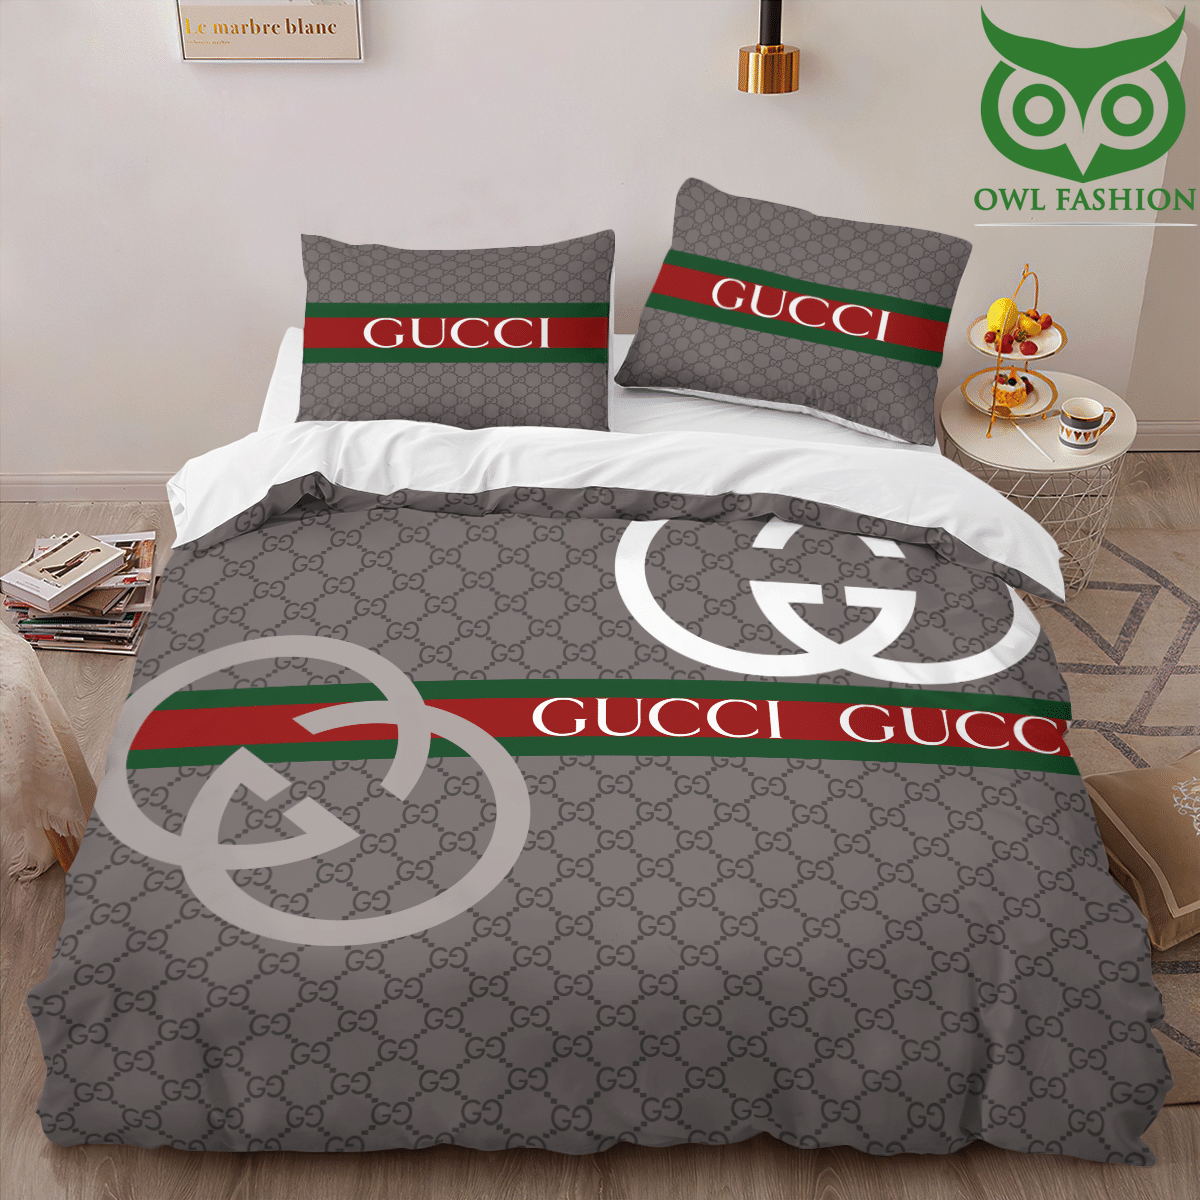 Gucci simple logo grey pattern bedding set